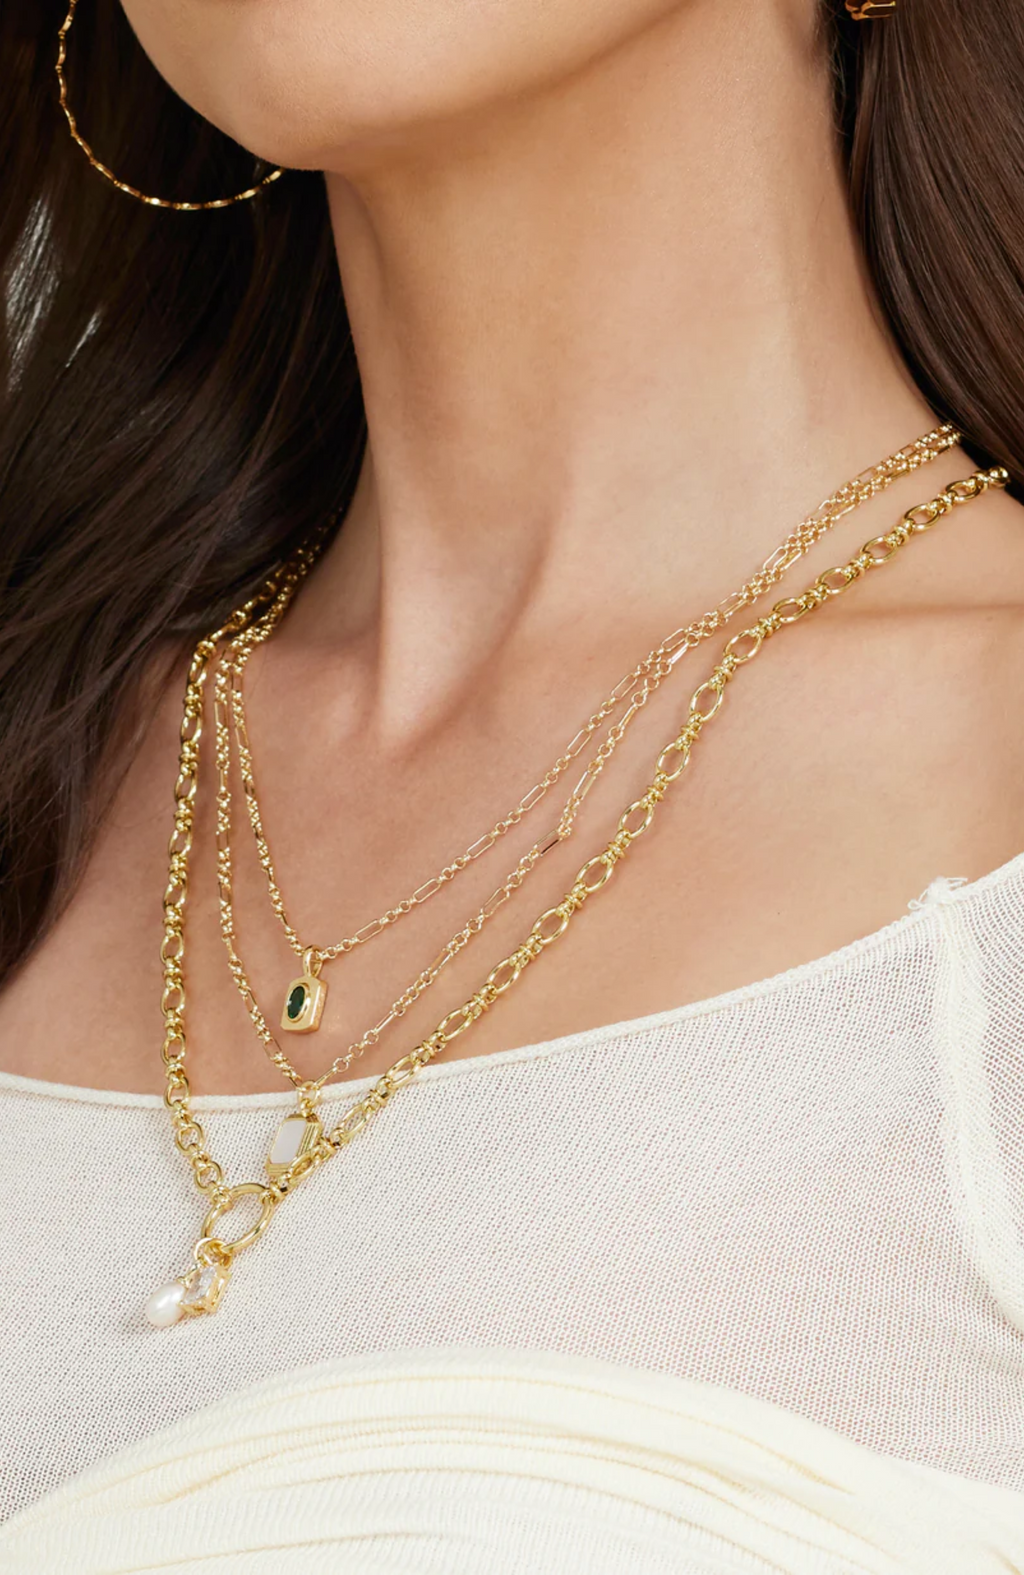 Kinsey Designs - Mirabelle Pendant Necklace